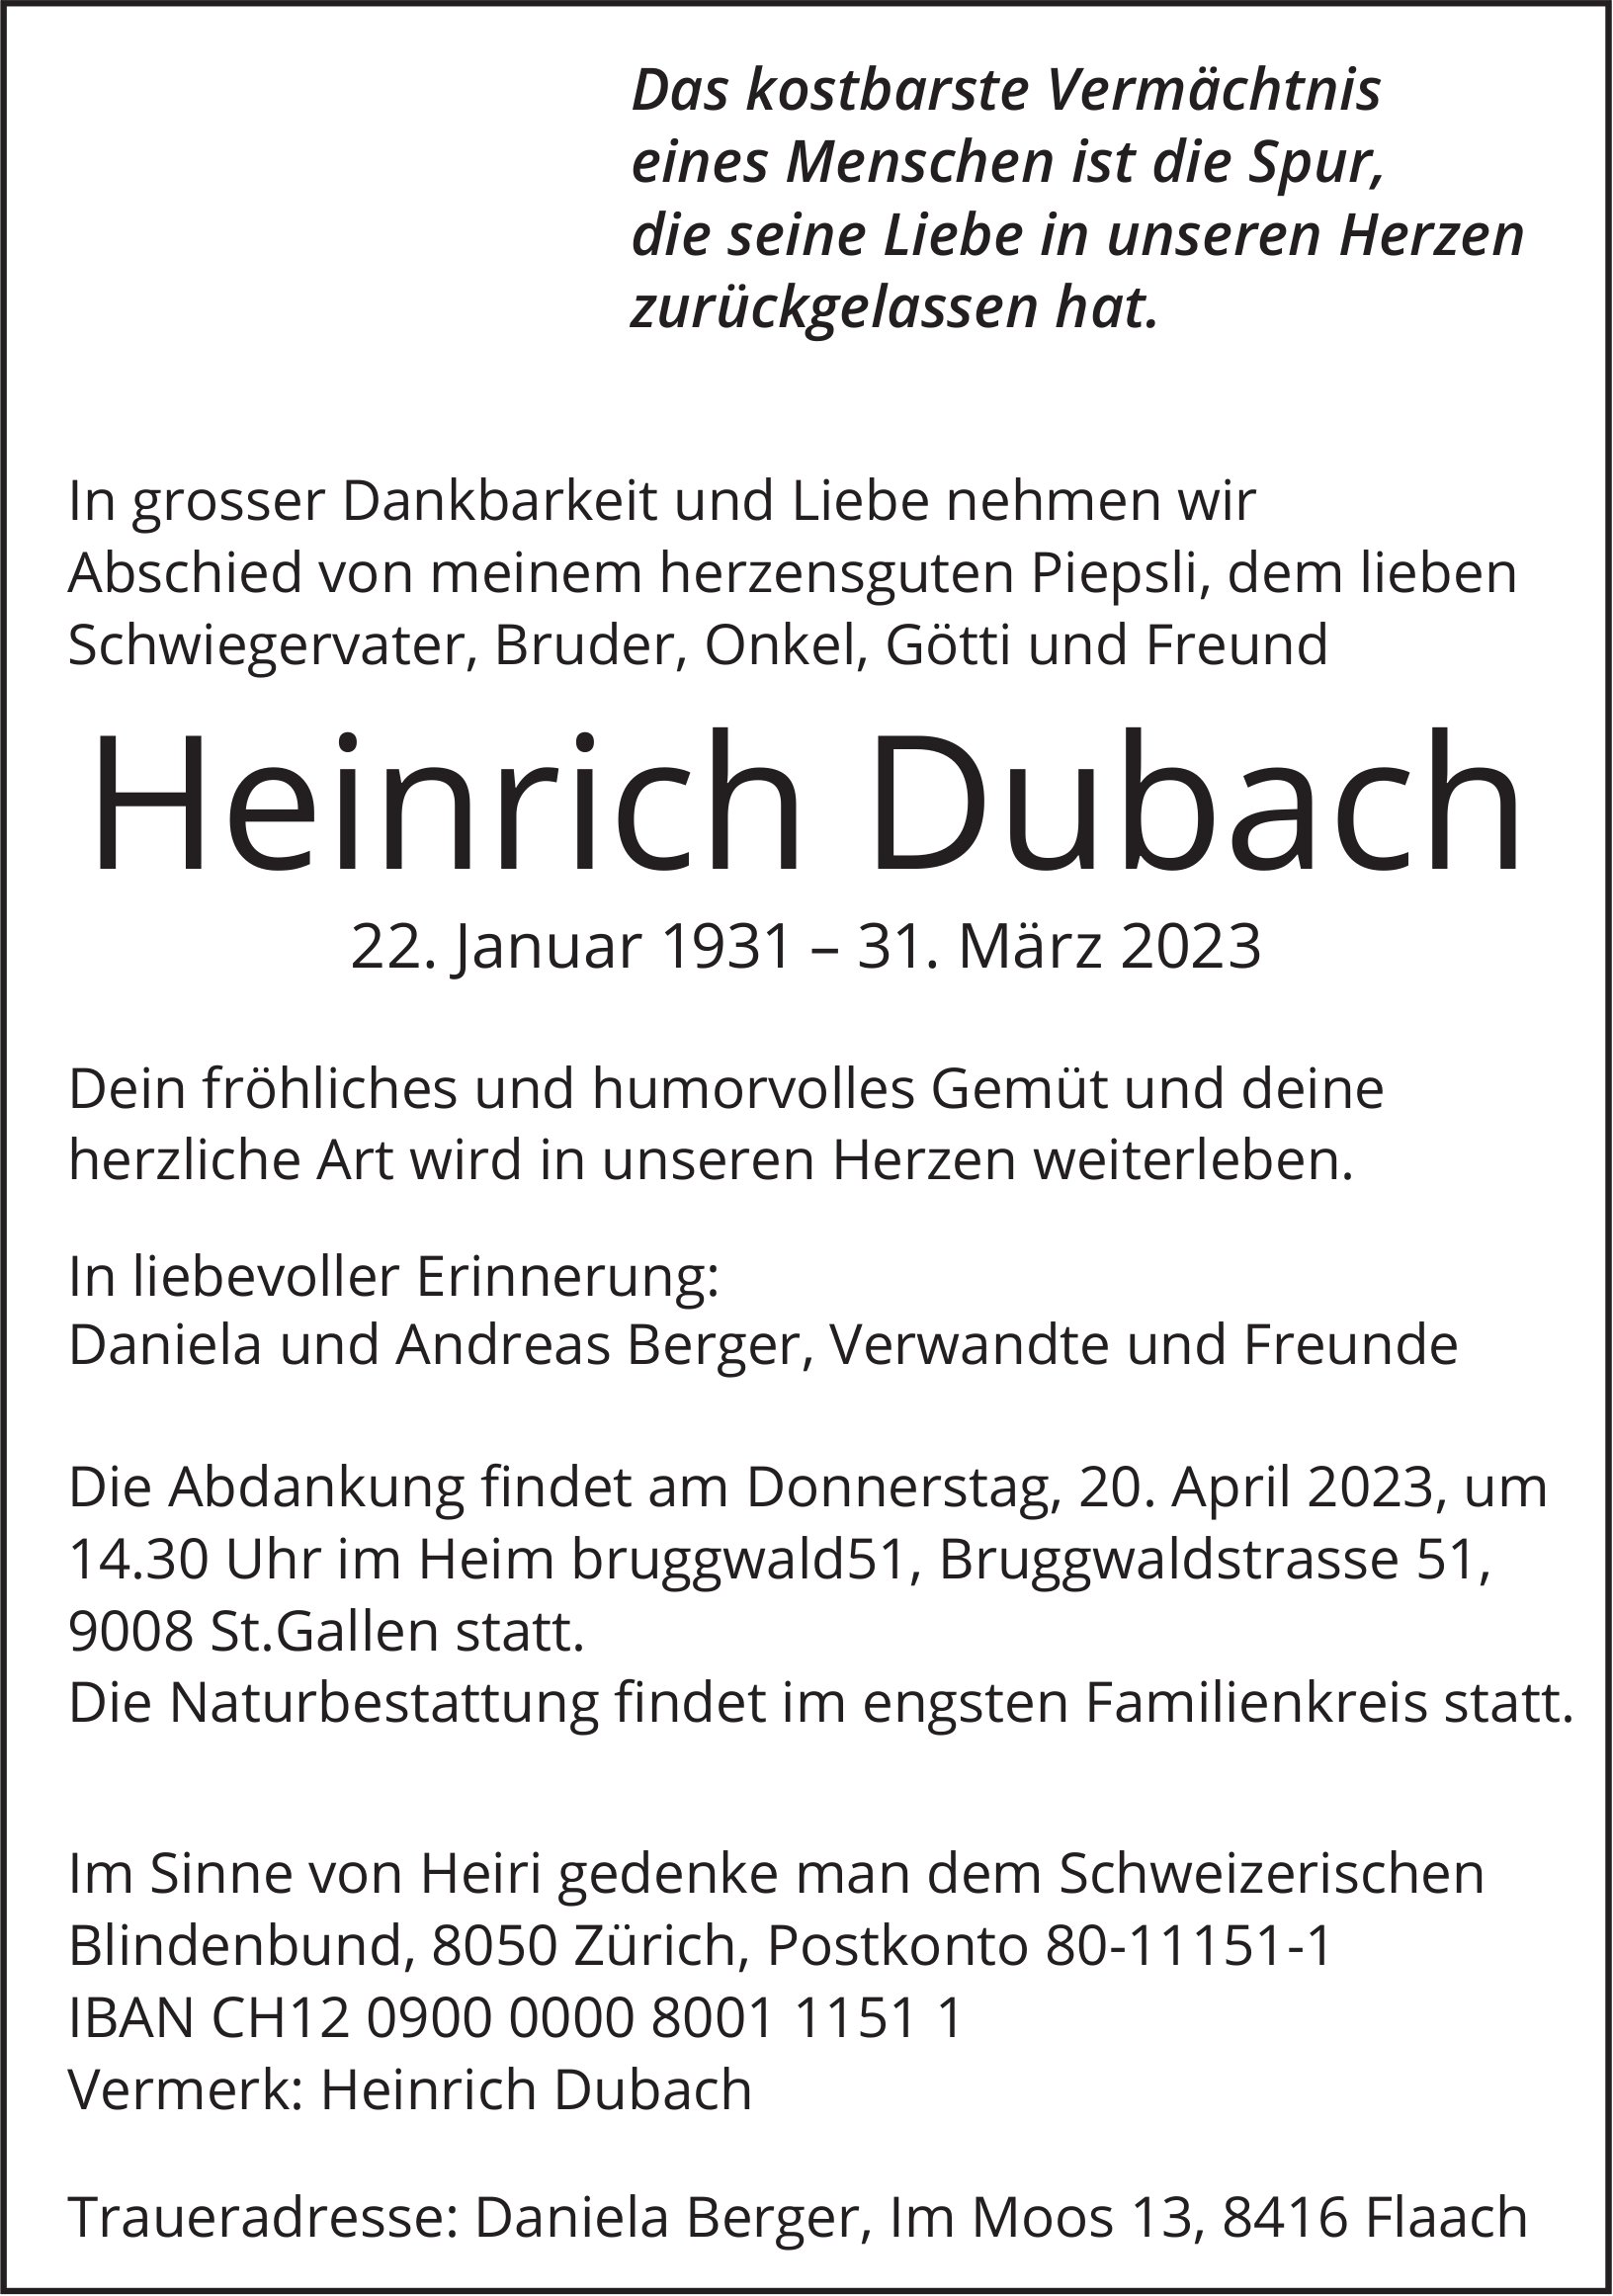 Dubach Heinrich, März 2023 / TA